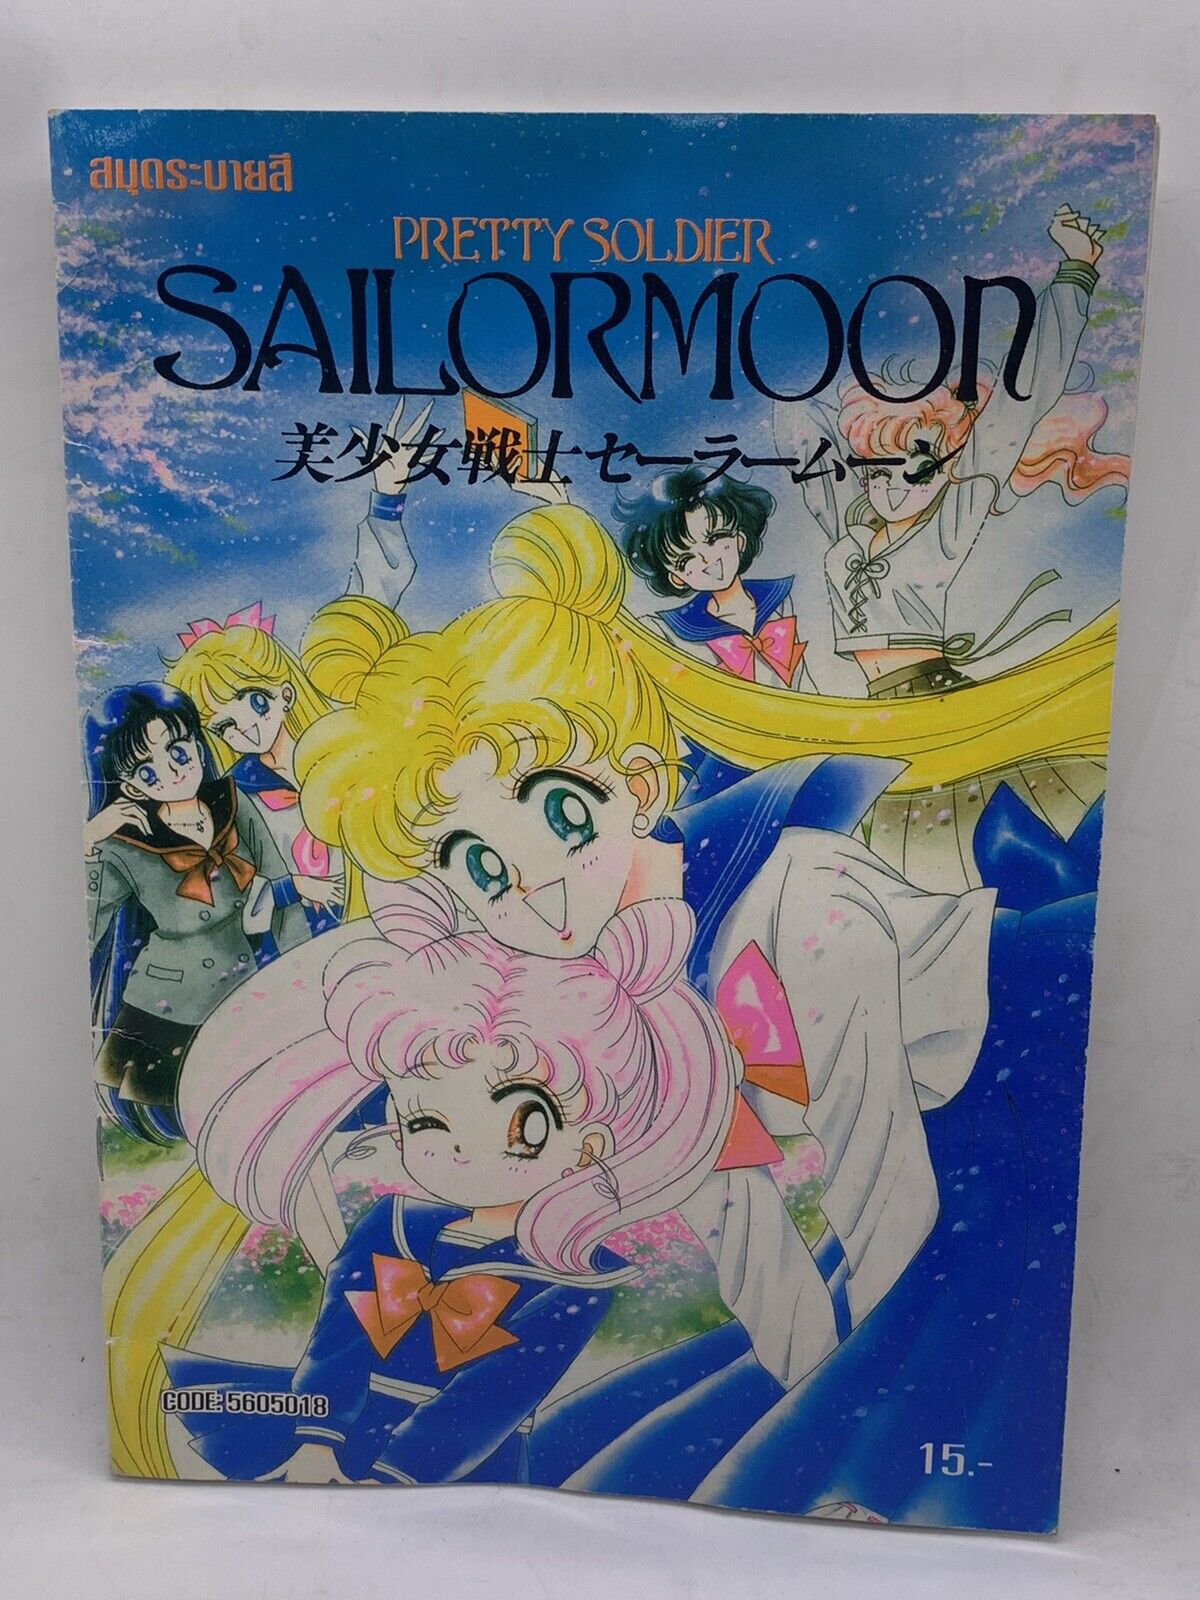 Vintage 1990’s Sailor Moon Pretty Soldier Coloring Book Art 5605018 15